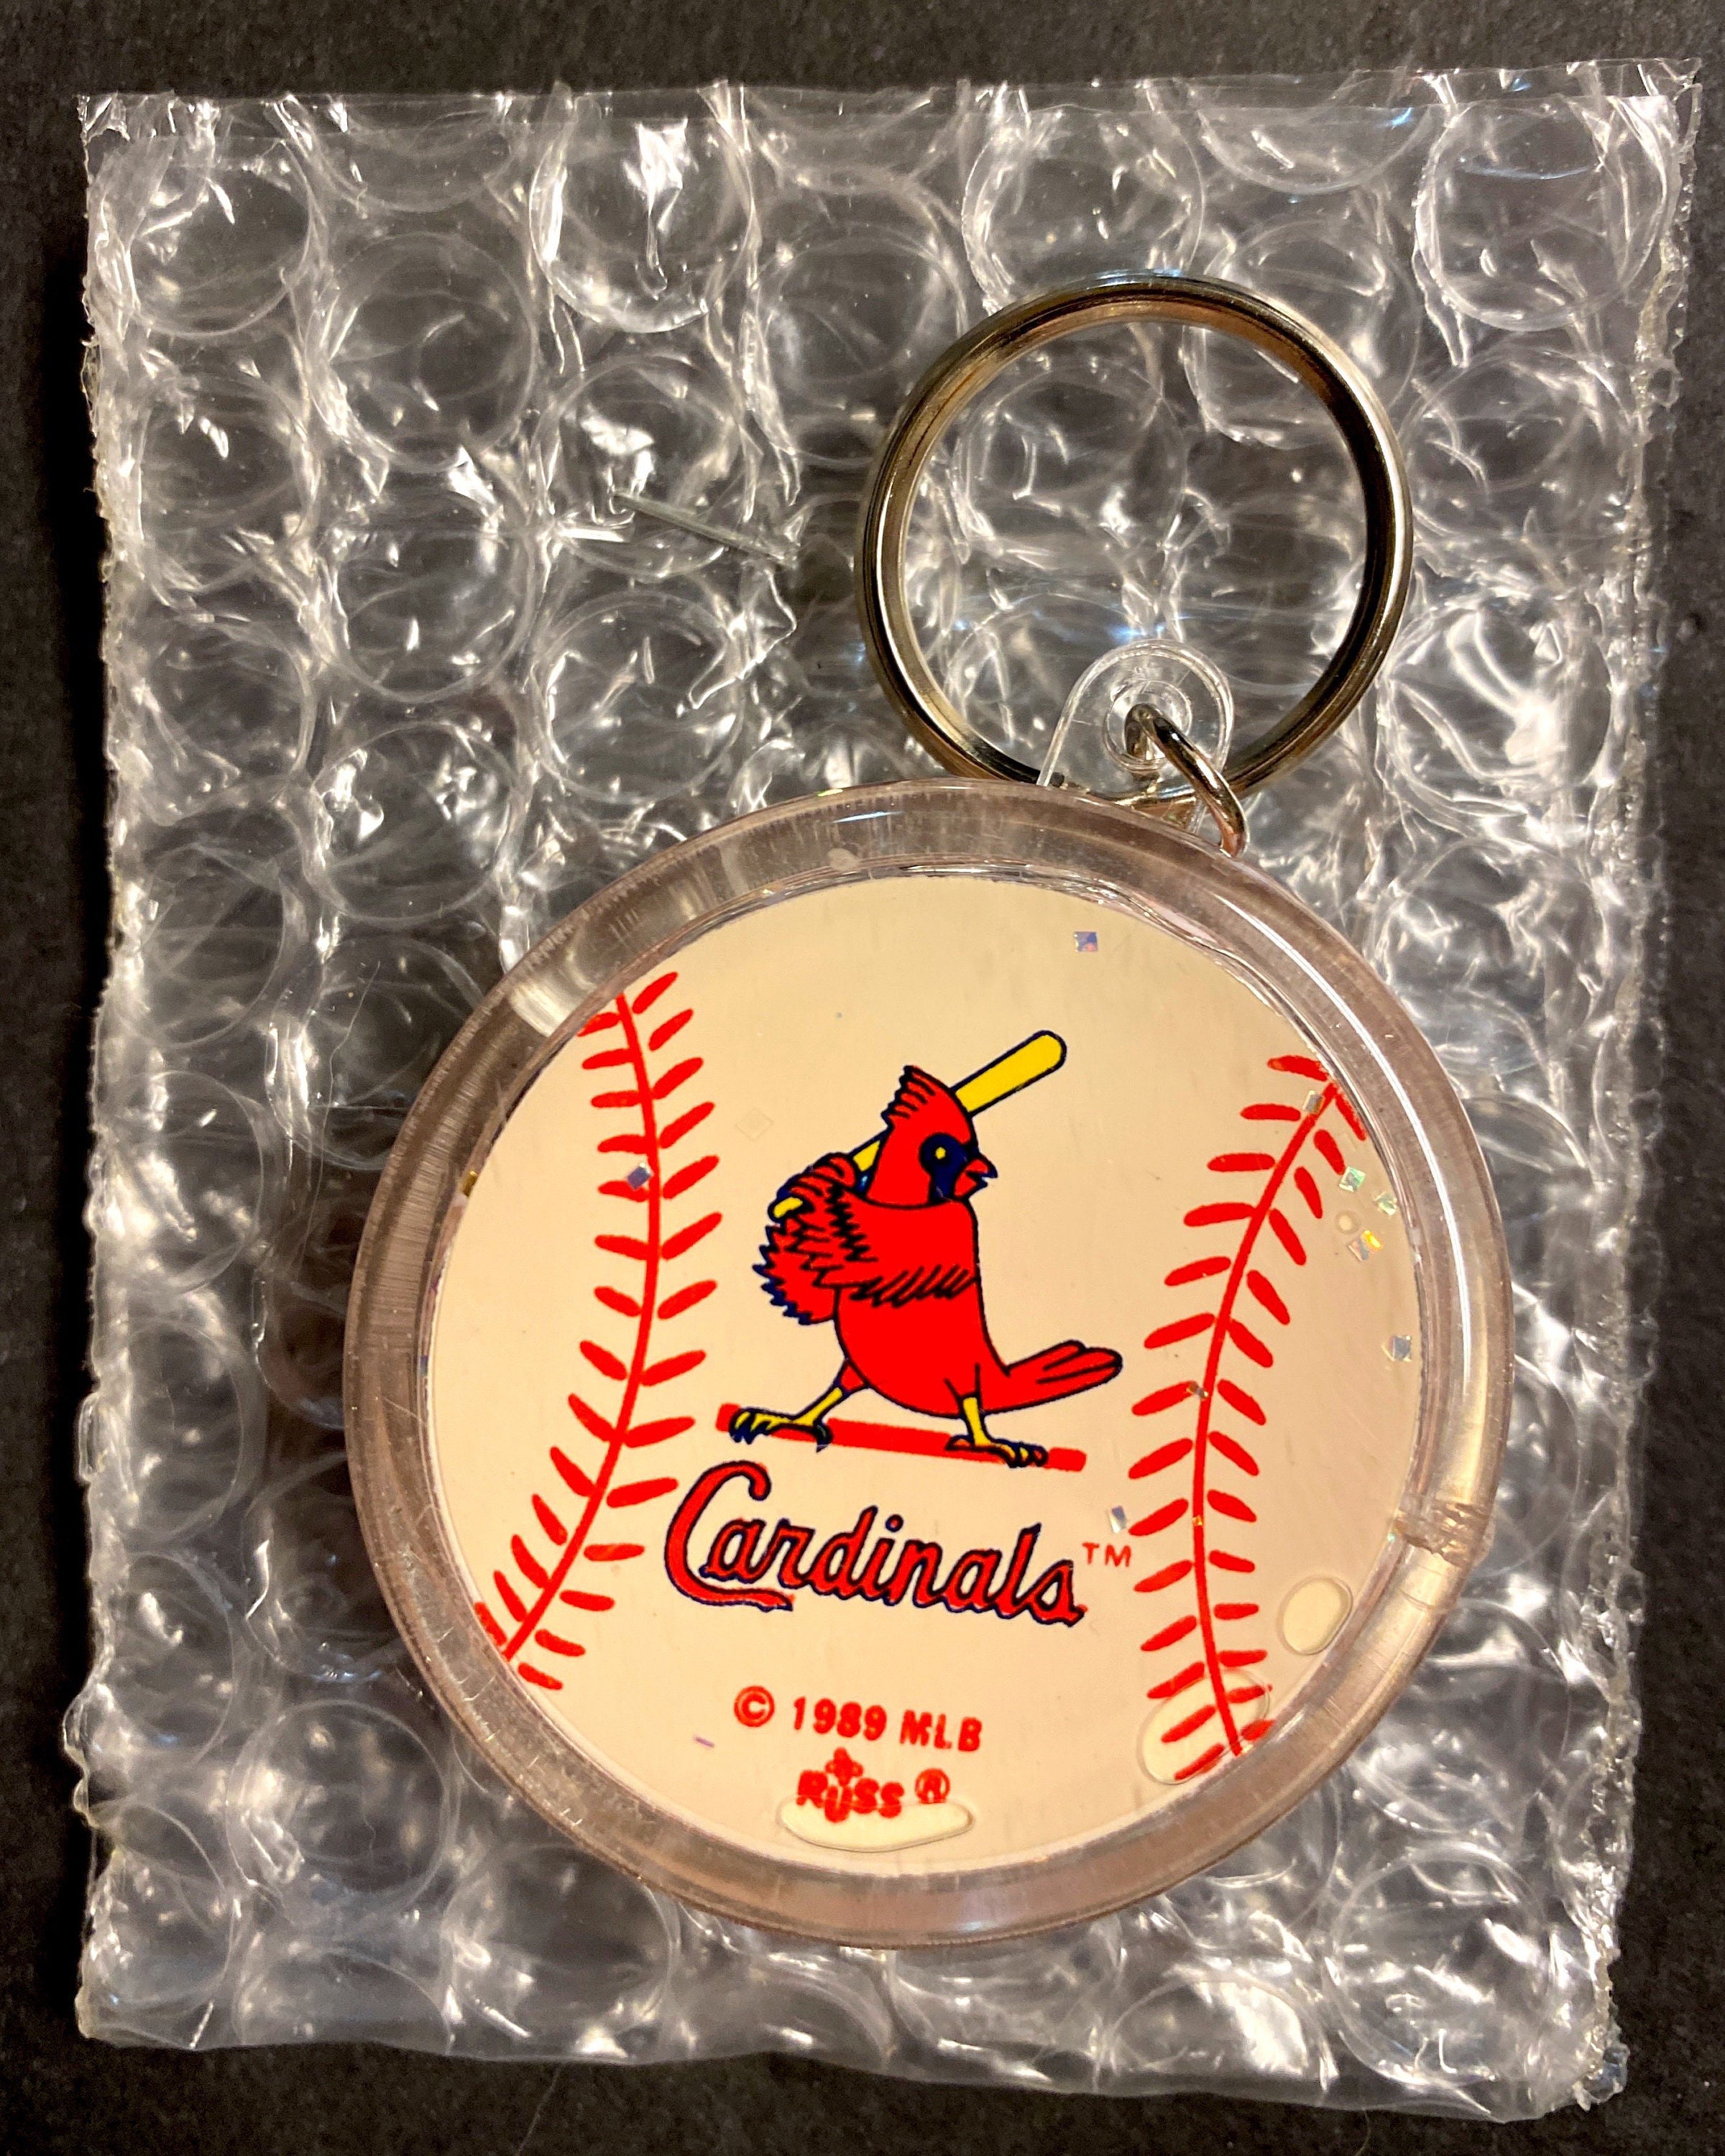 St. Louis Cardinals Vintage Logo Keychain